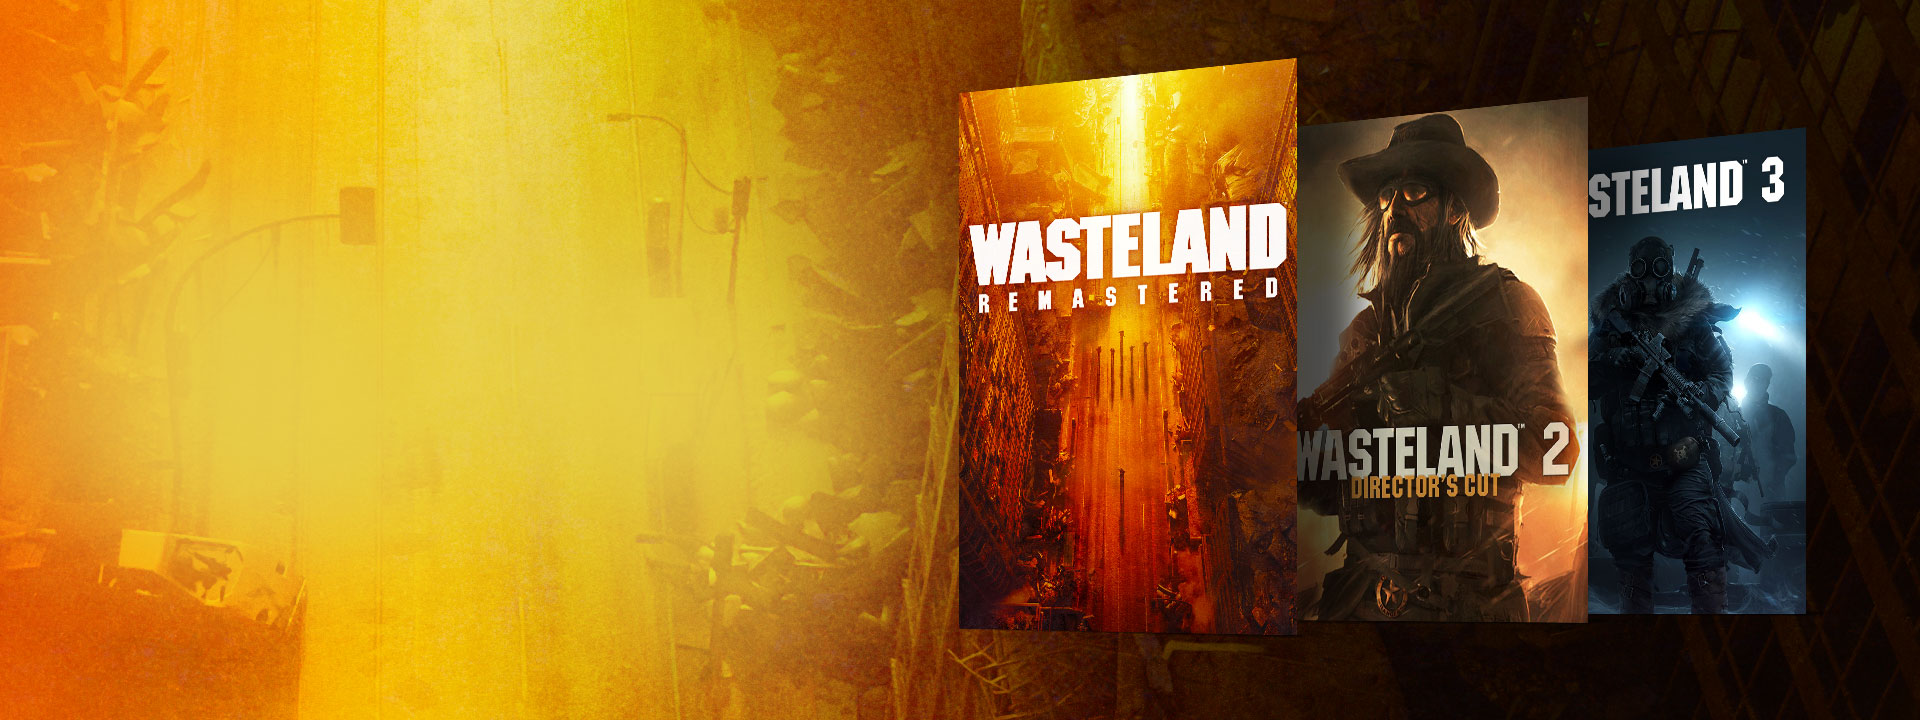 Wasteland Remastered 박스샷, Wasteland 2 디렉터 컷 및 Wasteland 3. 노란색과 주황색 색상을 띤 버려진 거리의 배경